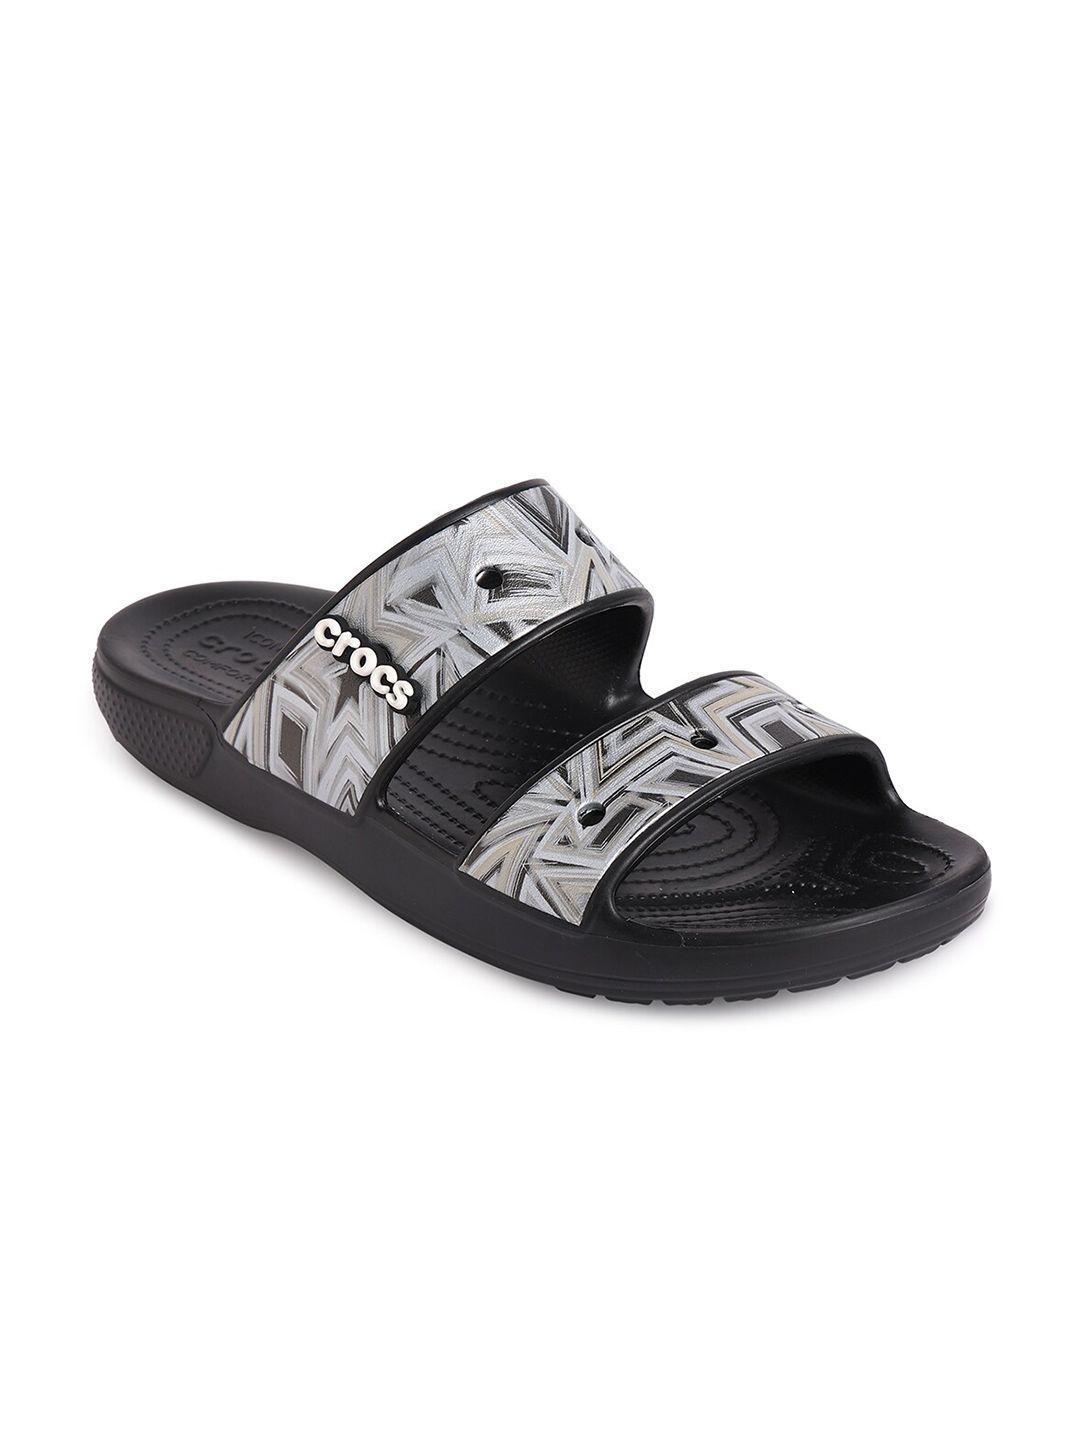 crocs unisex black & grey comfort sandals